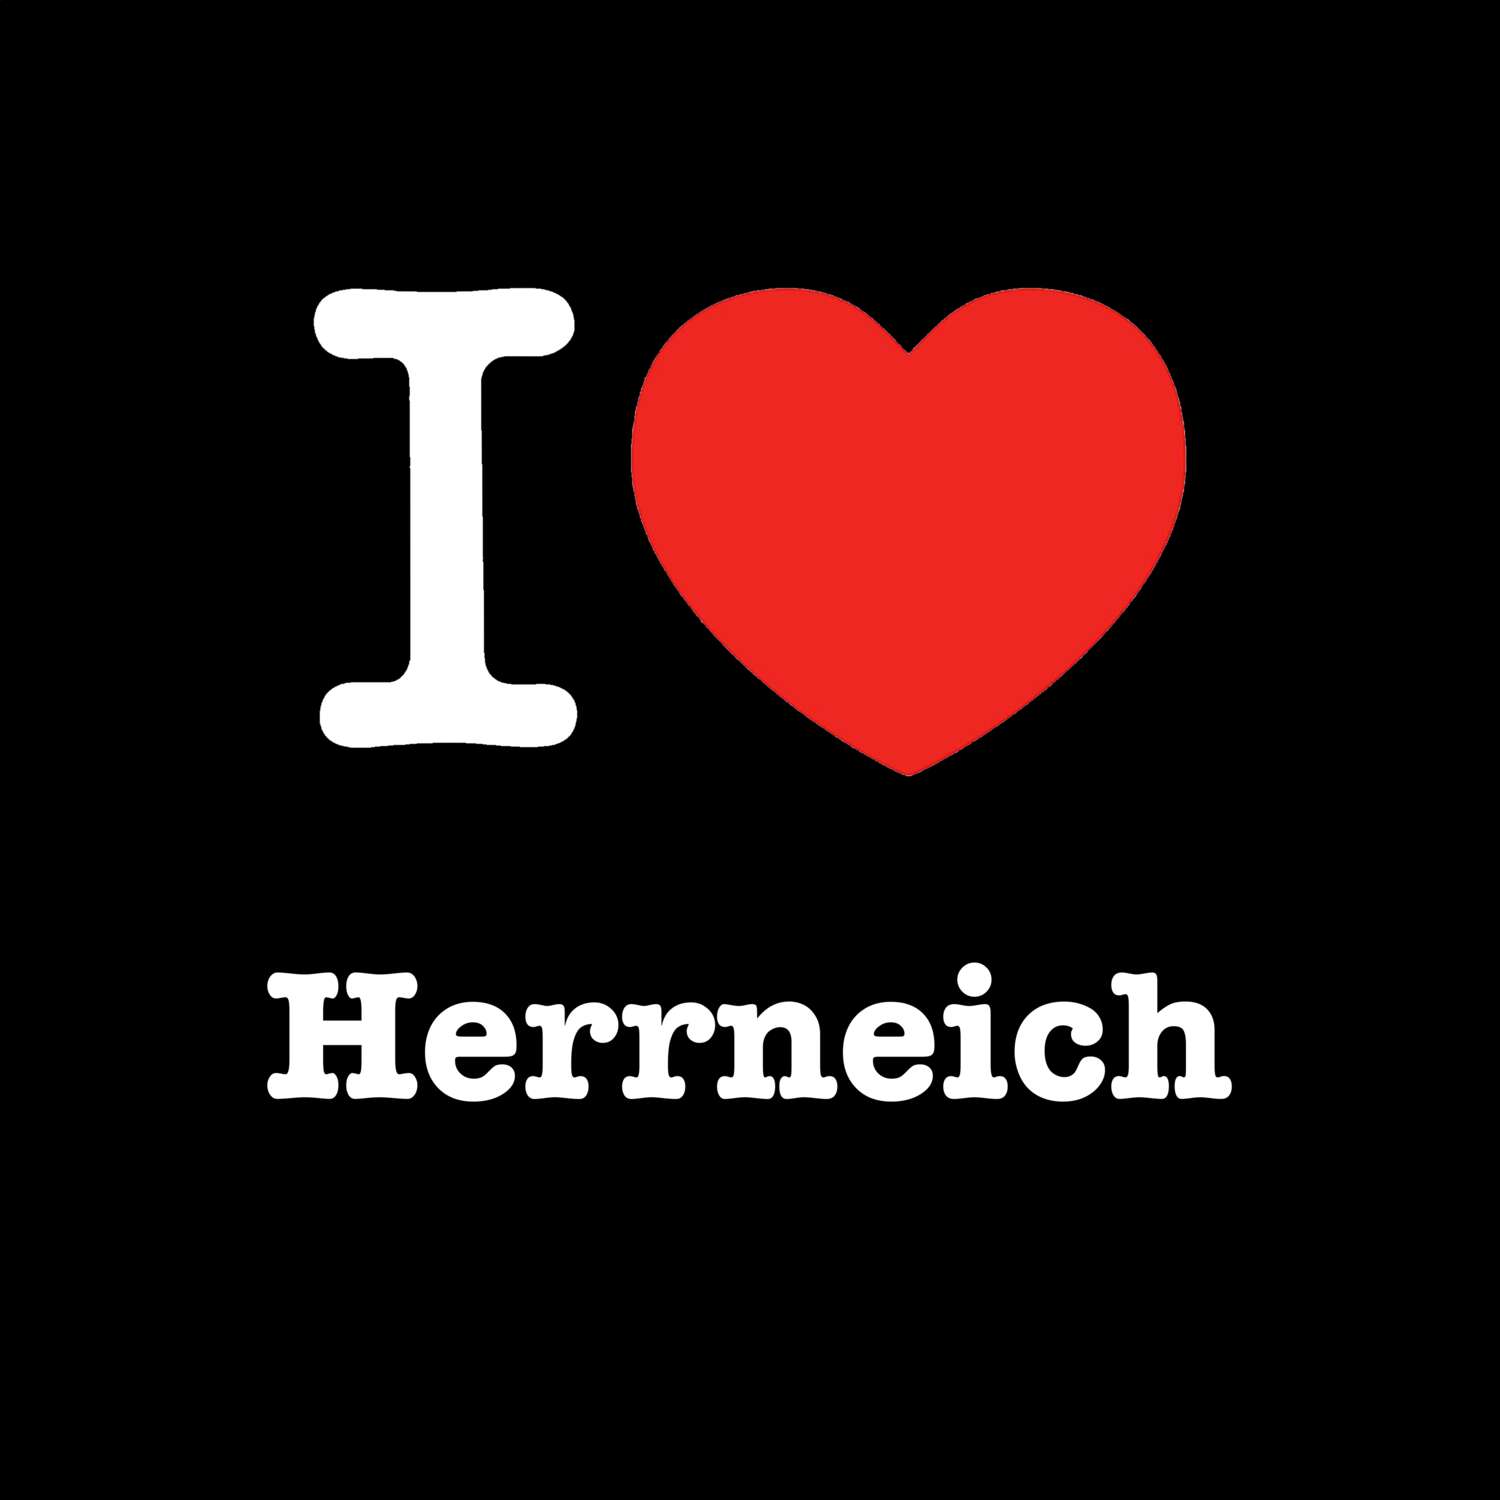 Herrneich T-Shirt »I love«